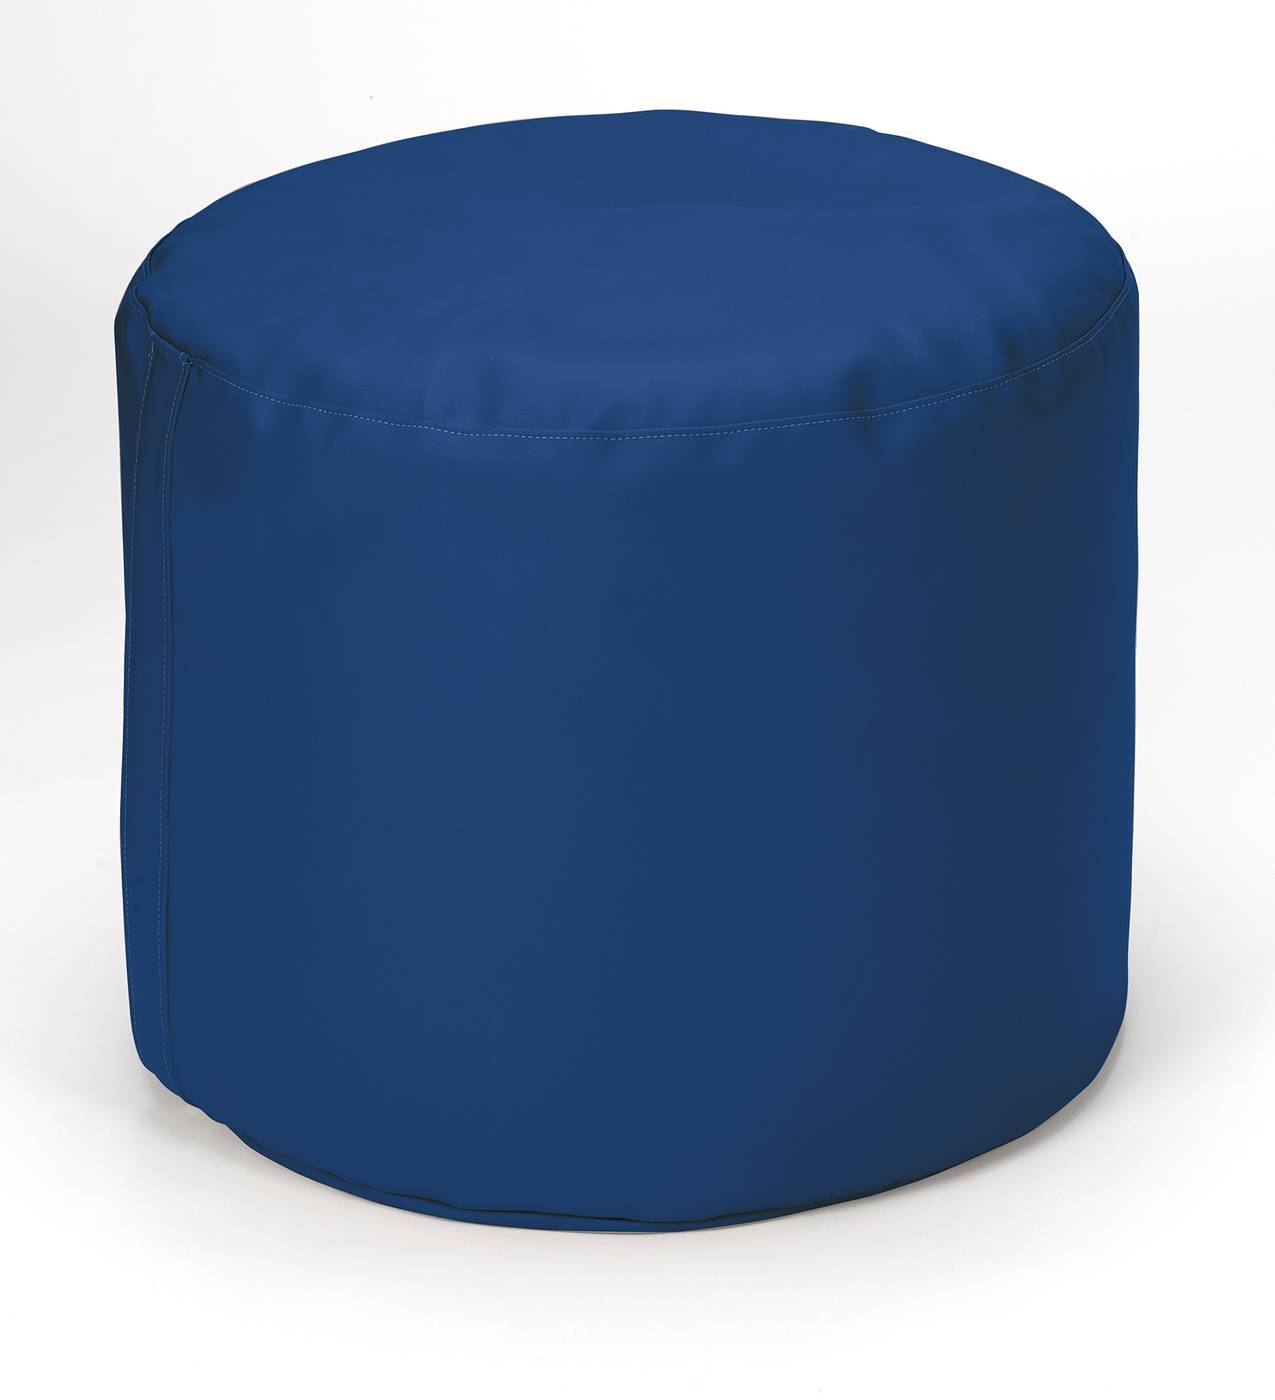 Pouf redondo para habitación juvenil, tapizado en polipiel de alta calidad color azul